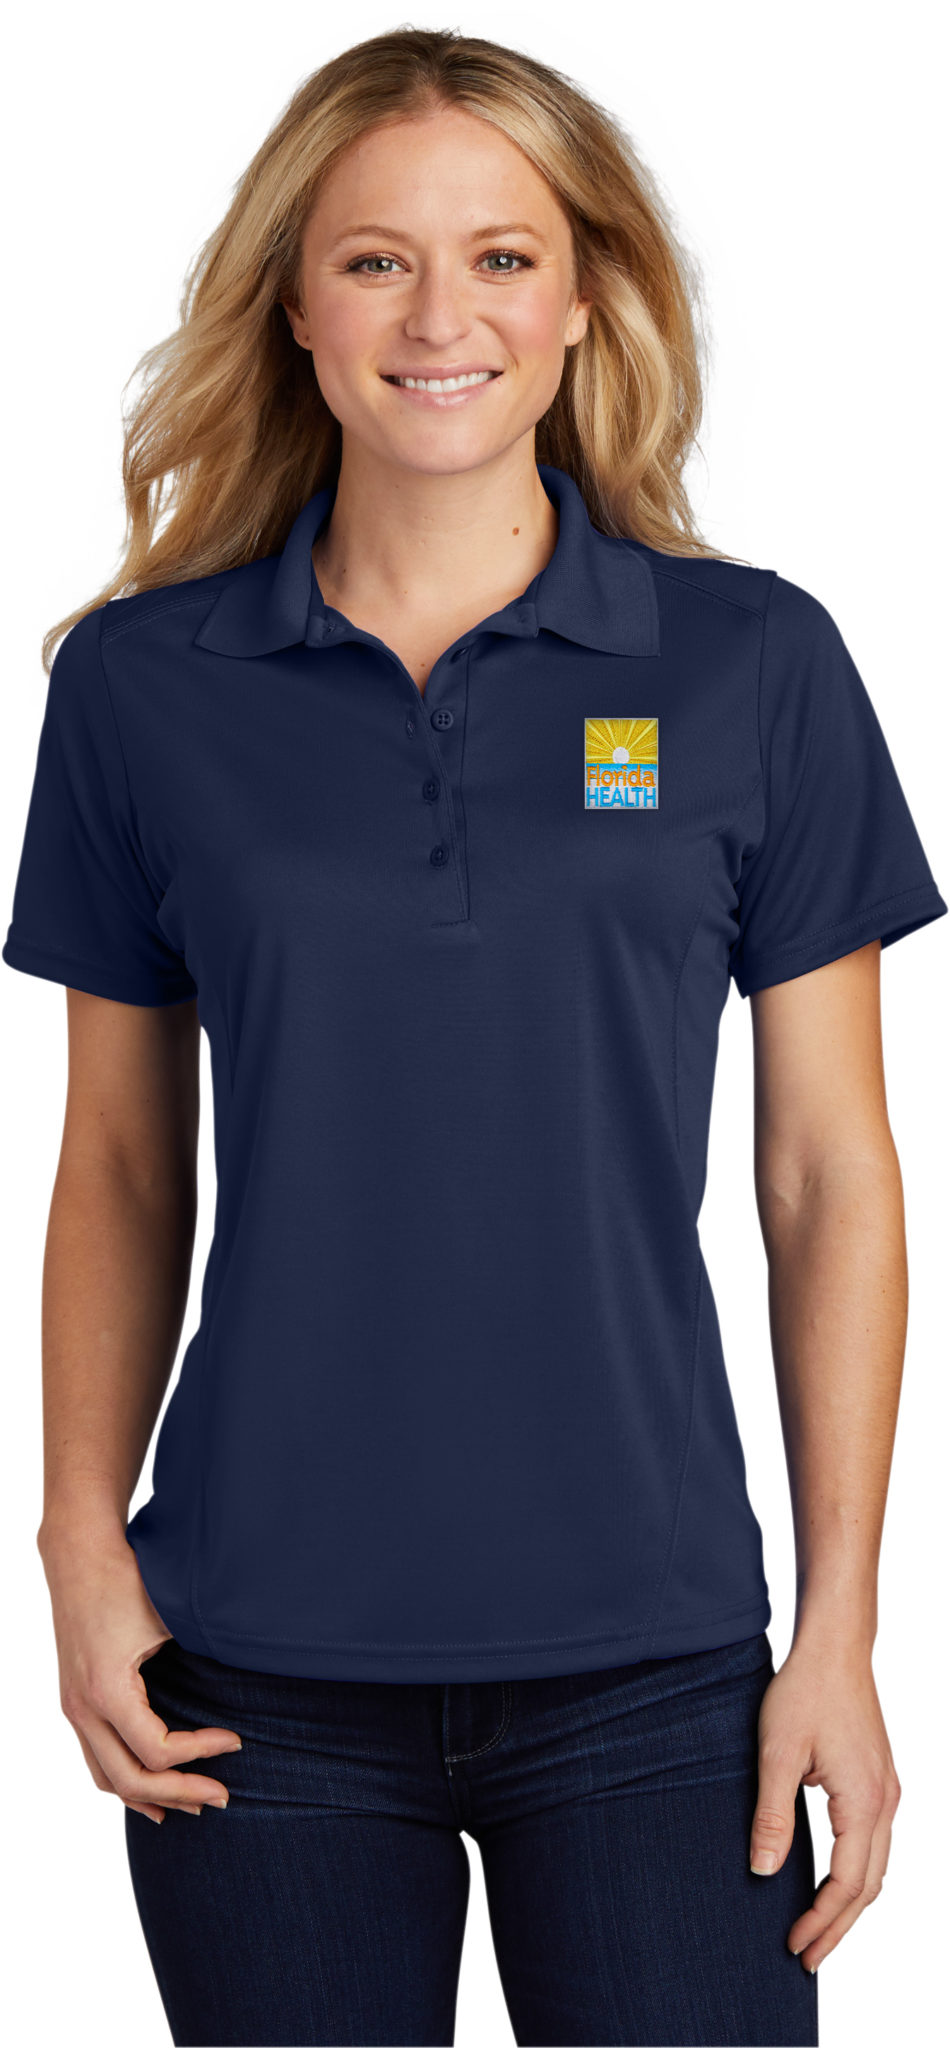 L475 - Sport-Tek Ladies Dry Zone Raglan Accent Polo - DOH Shirts ...